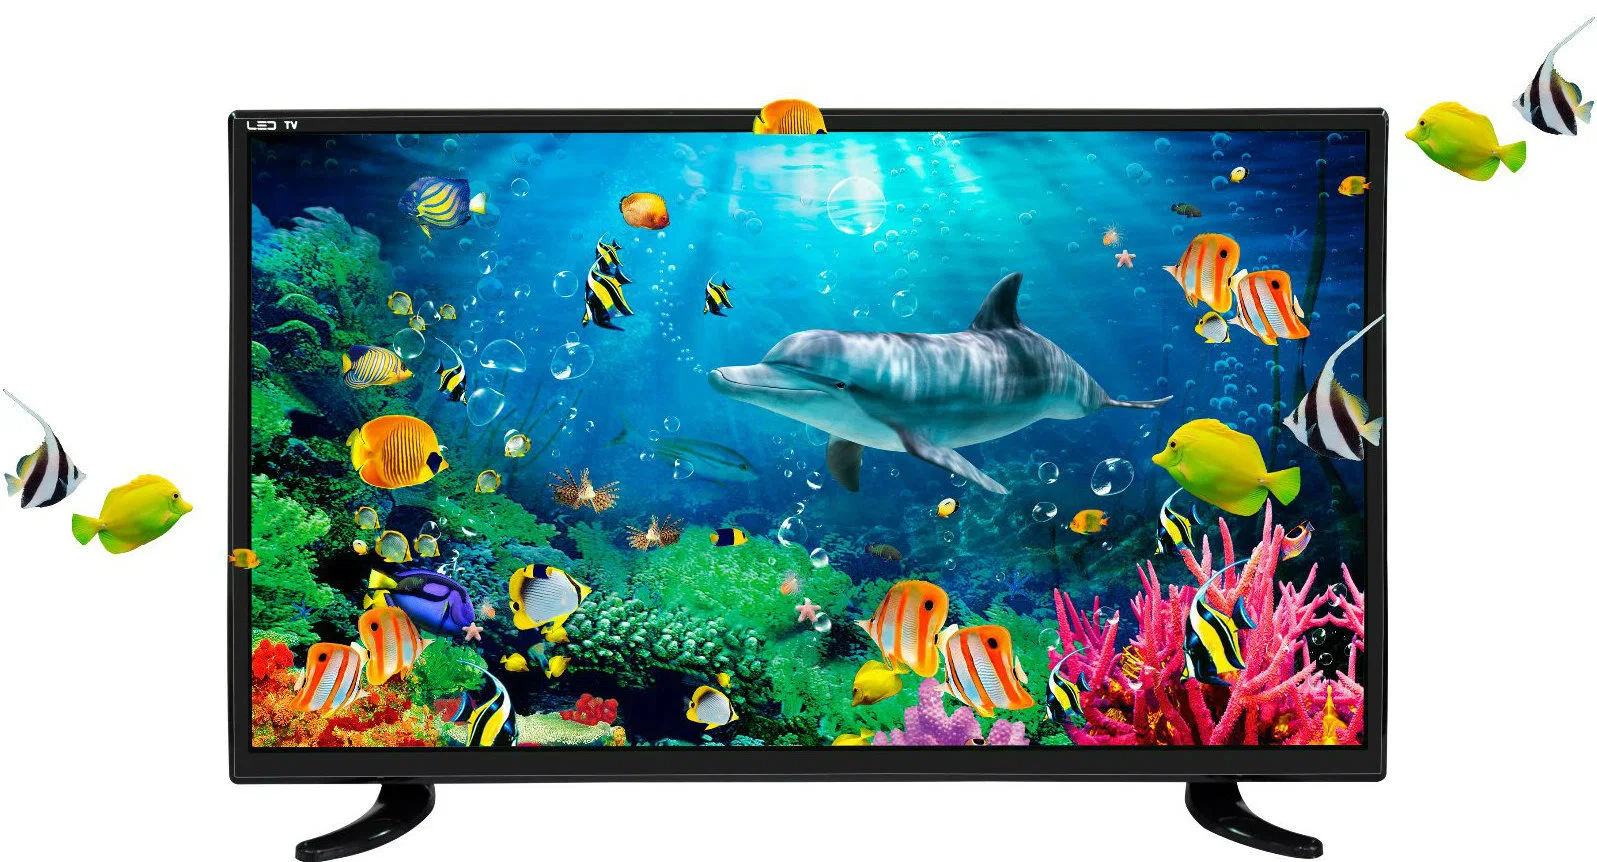 De 32 pulgadas de pantalla plana LCD Color de alta definición de Smart TV LED